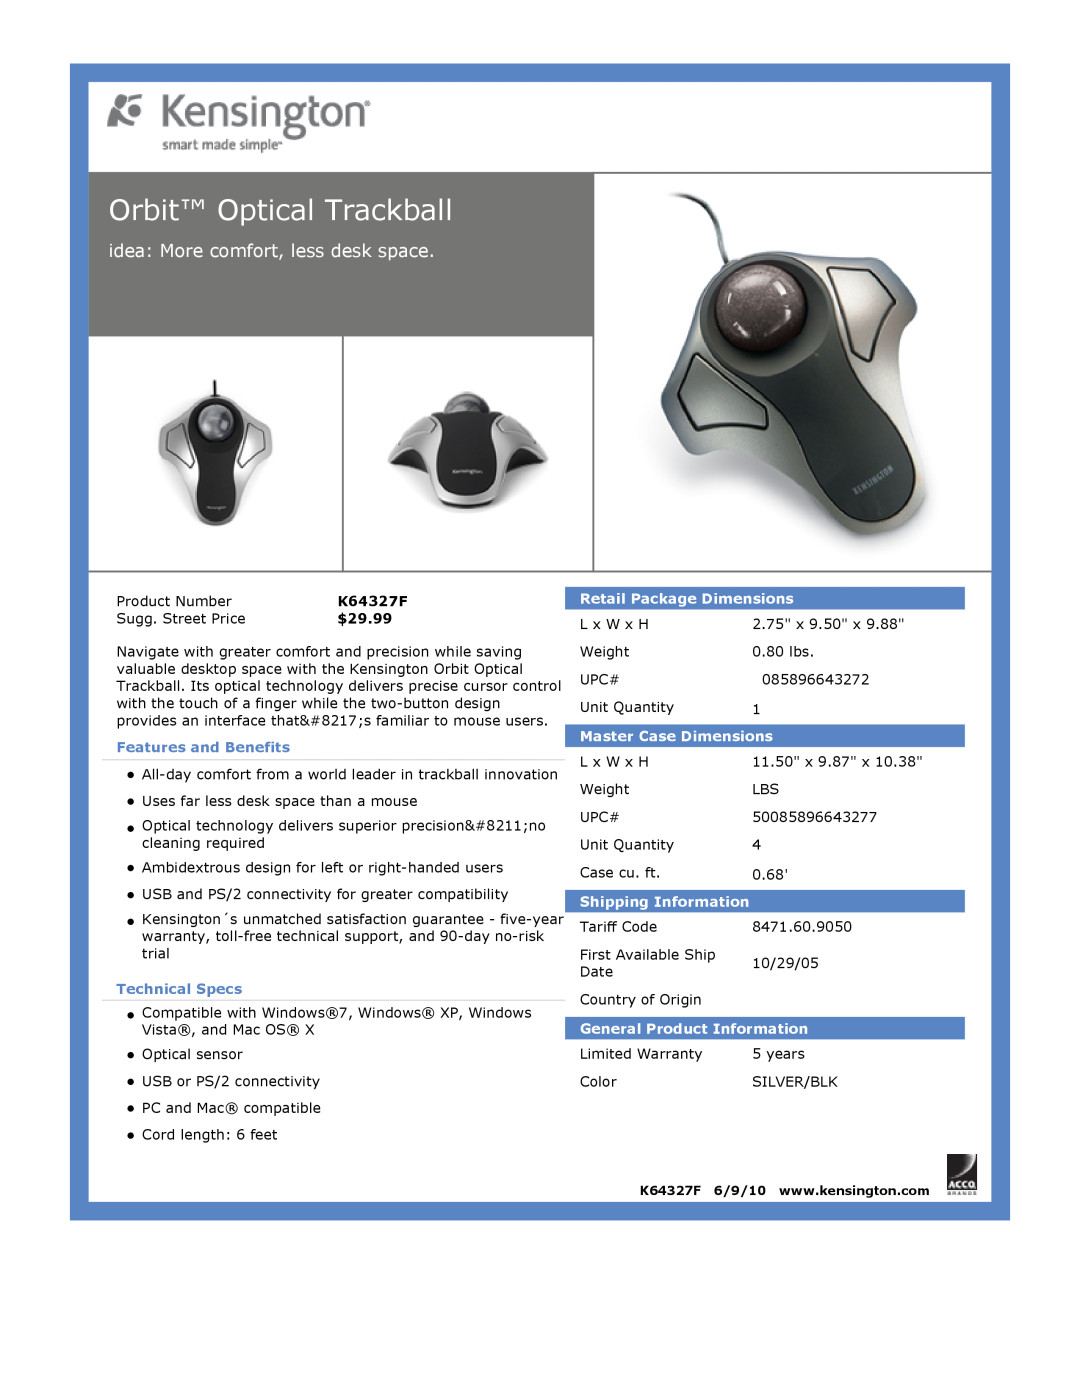 Kensington EU64325 dimensions Orbit Optical Trackball, idea: More comfort, less desk space, $29.99, Features and Benefits 